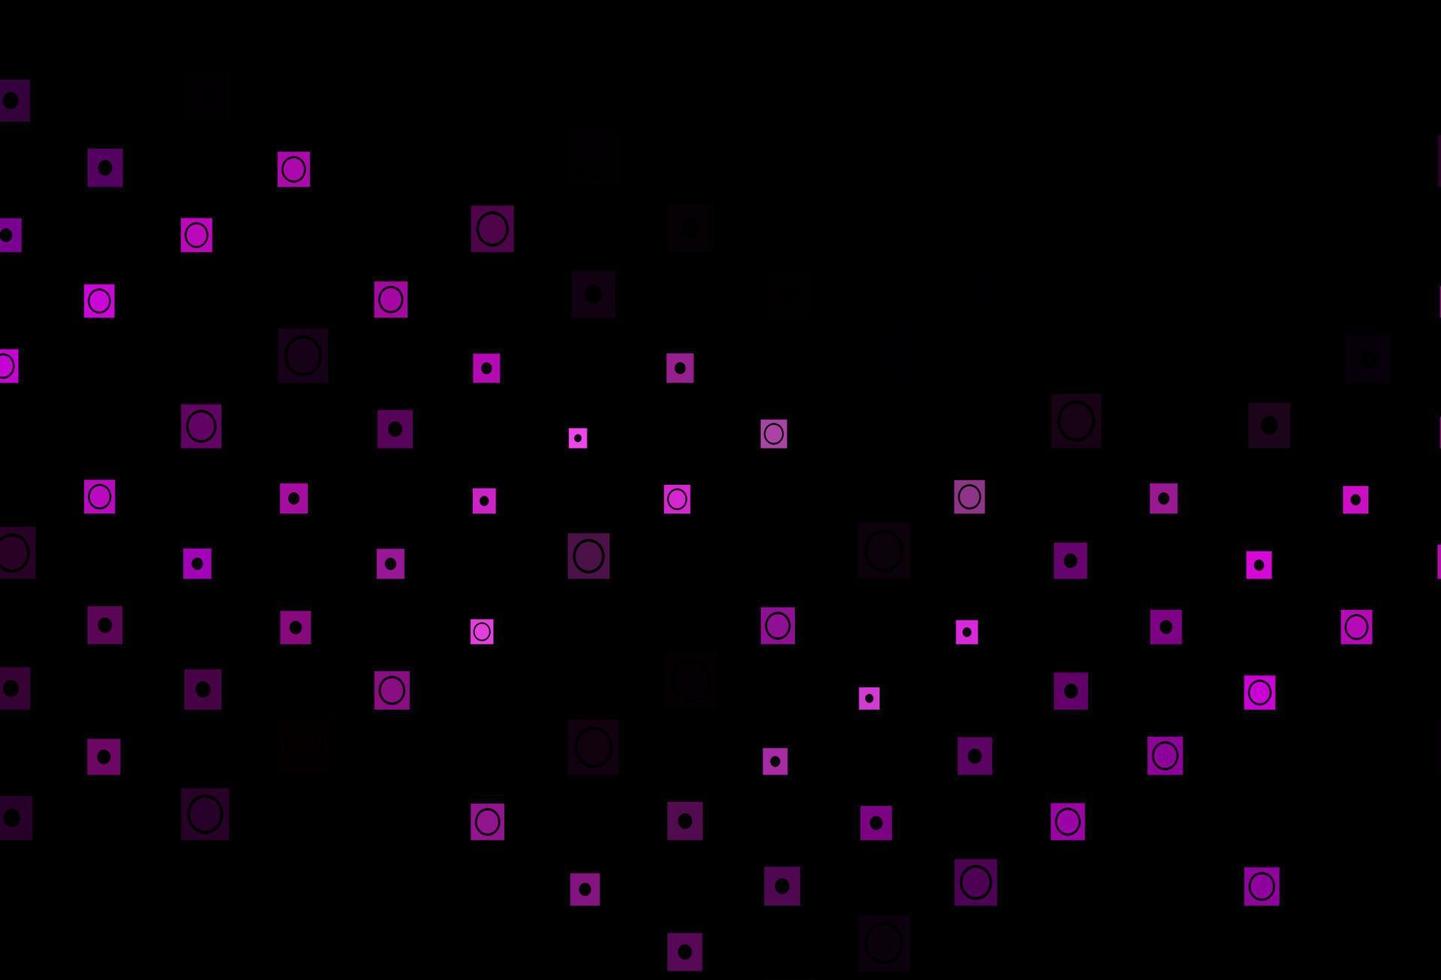 cobertura de vetor roxo escuro em estilo poligonal e circular.